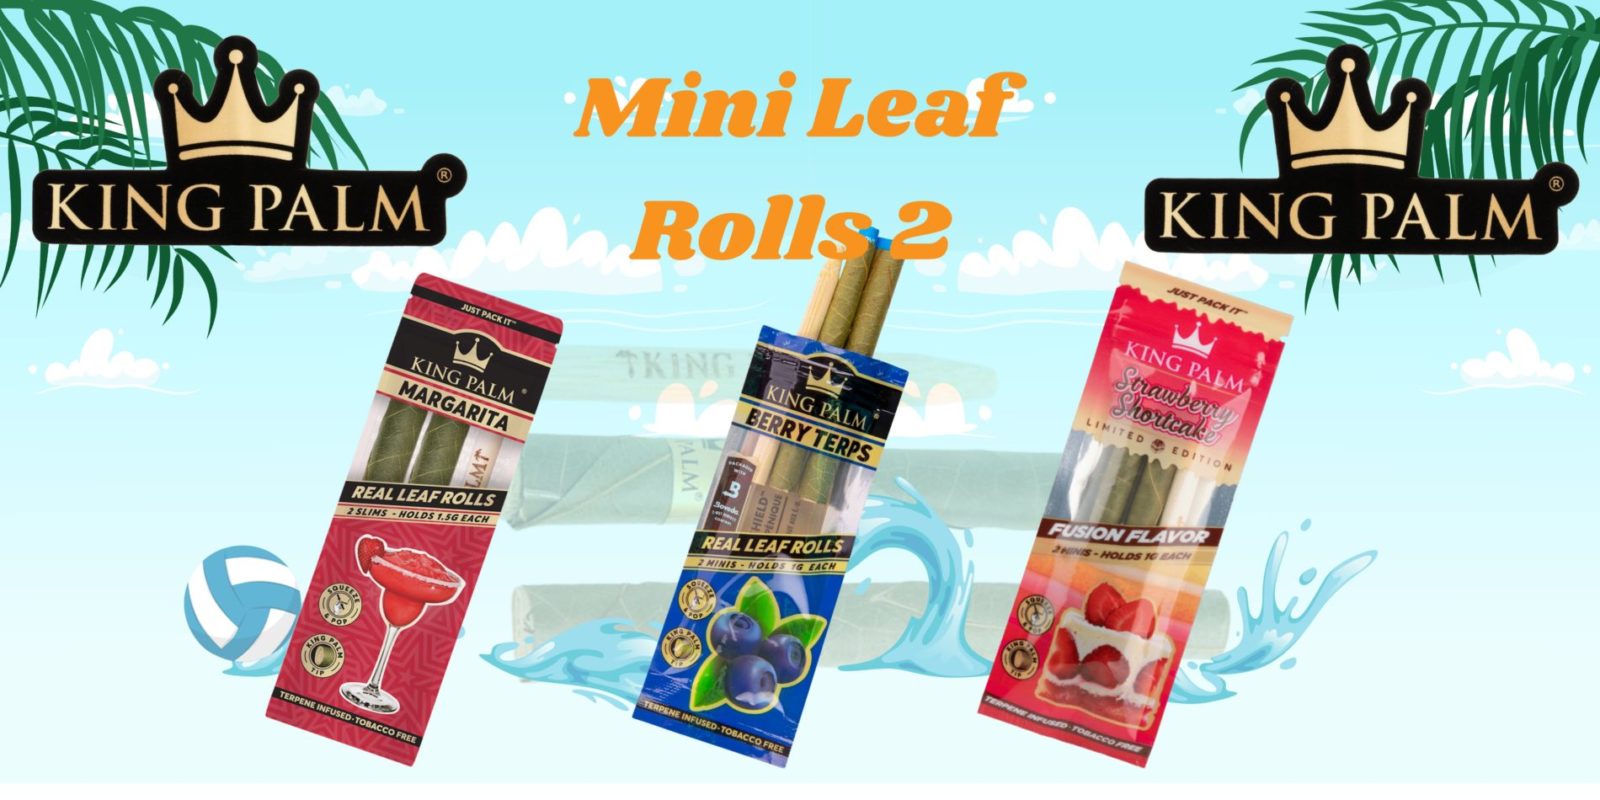 King Palm Mini Leaf Rolls 2 – Blue Grape 420 SUPPLIES - XMANIA Ireland 13